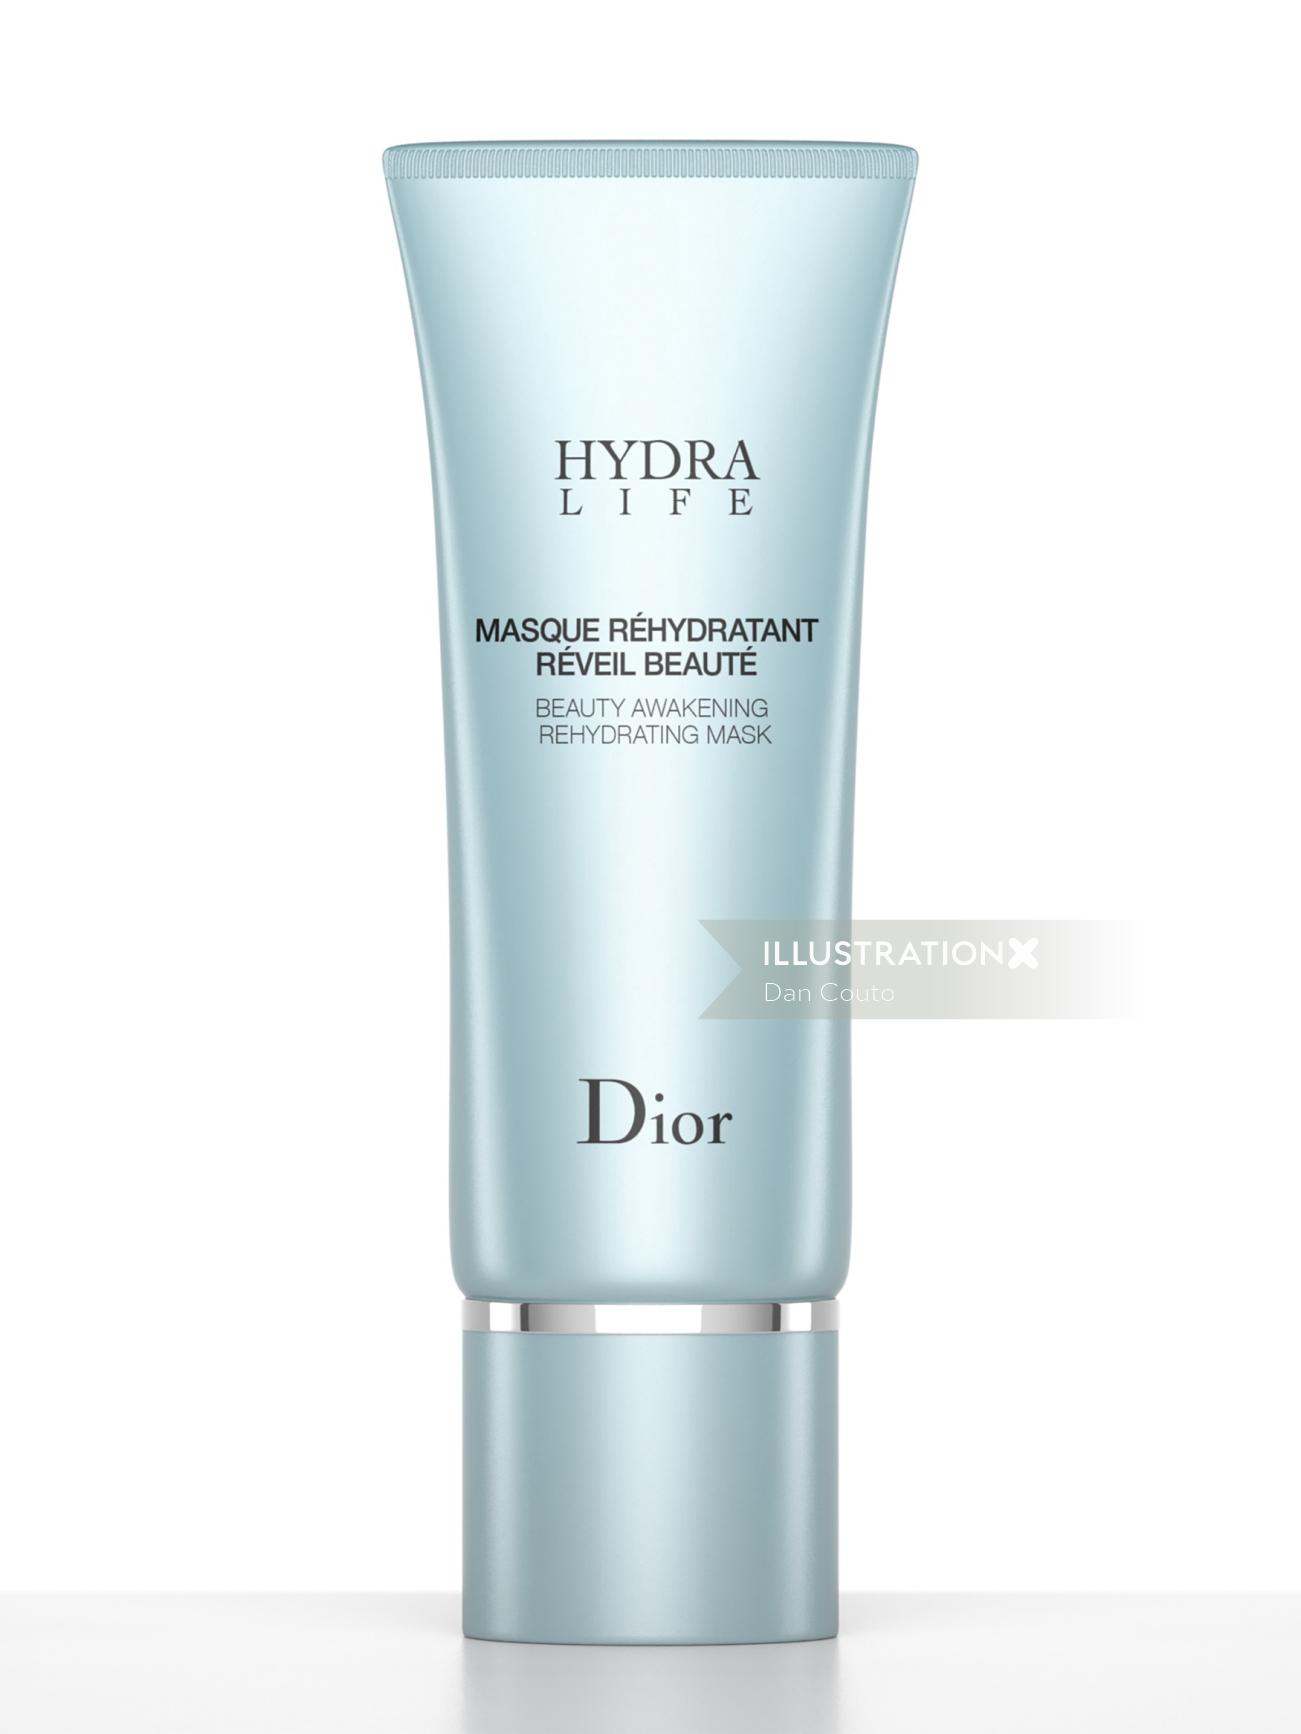 Dior Hydra Life Masque packaging illustration 